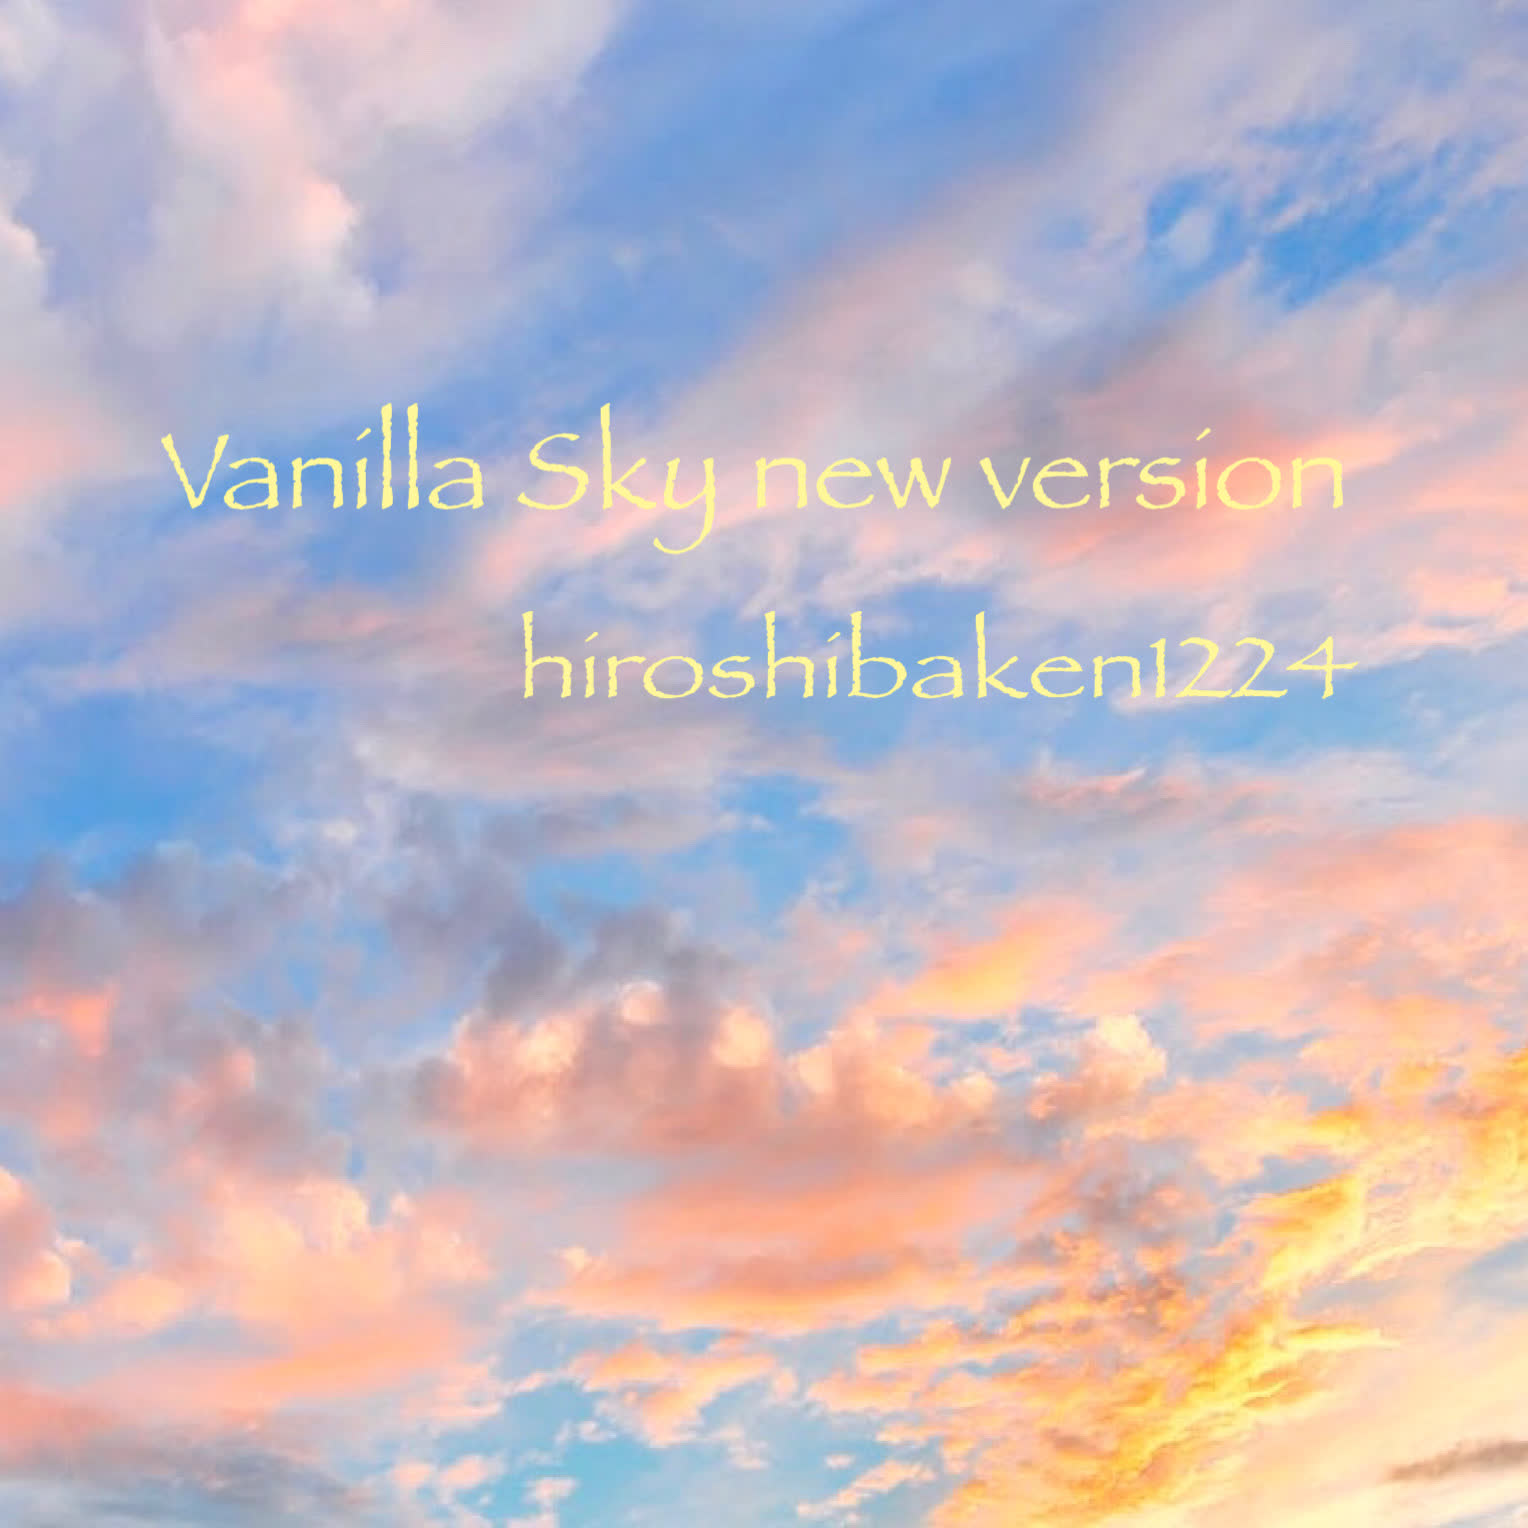 Vanilla sky new version